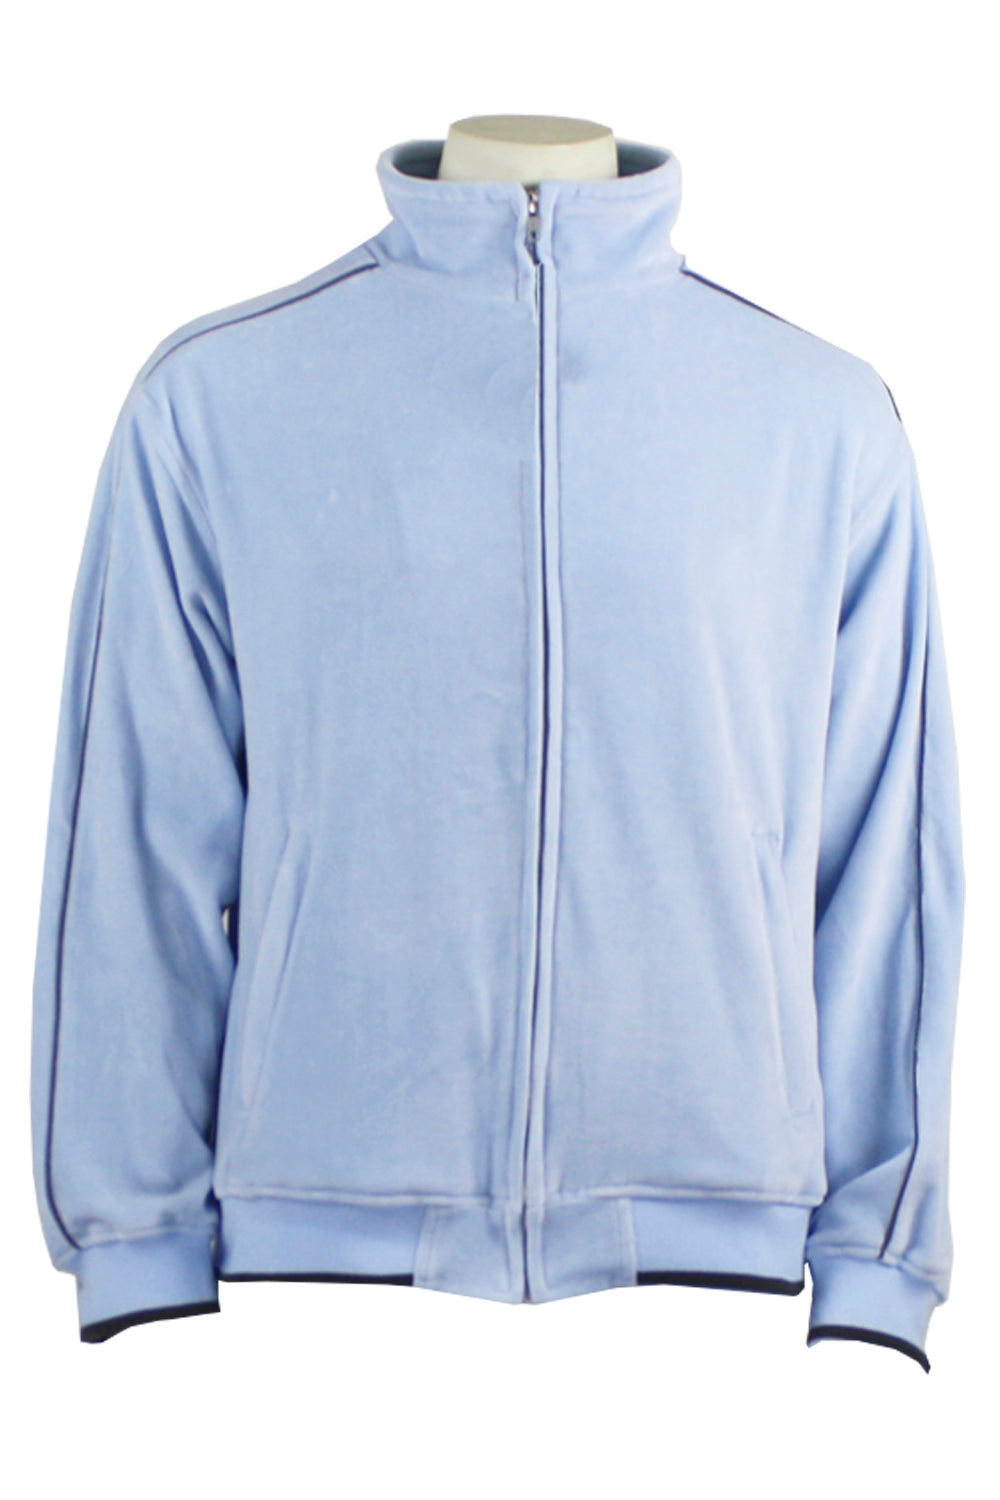 Rare Rabbit Men's Glaze Blue Plain Lightweight Blazer/Jacket